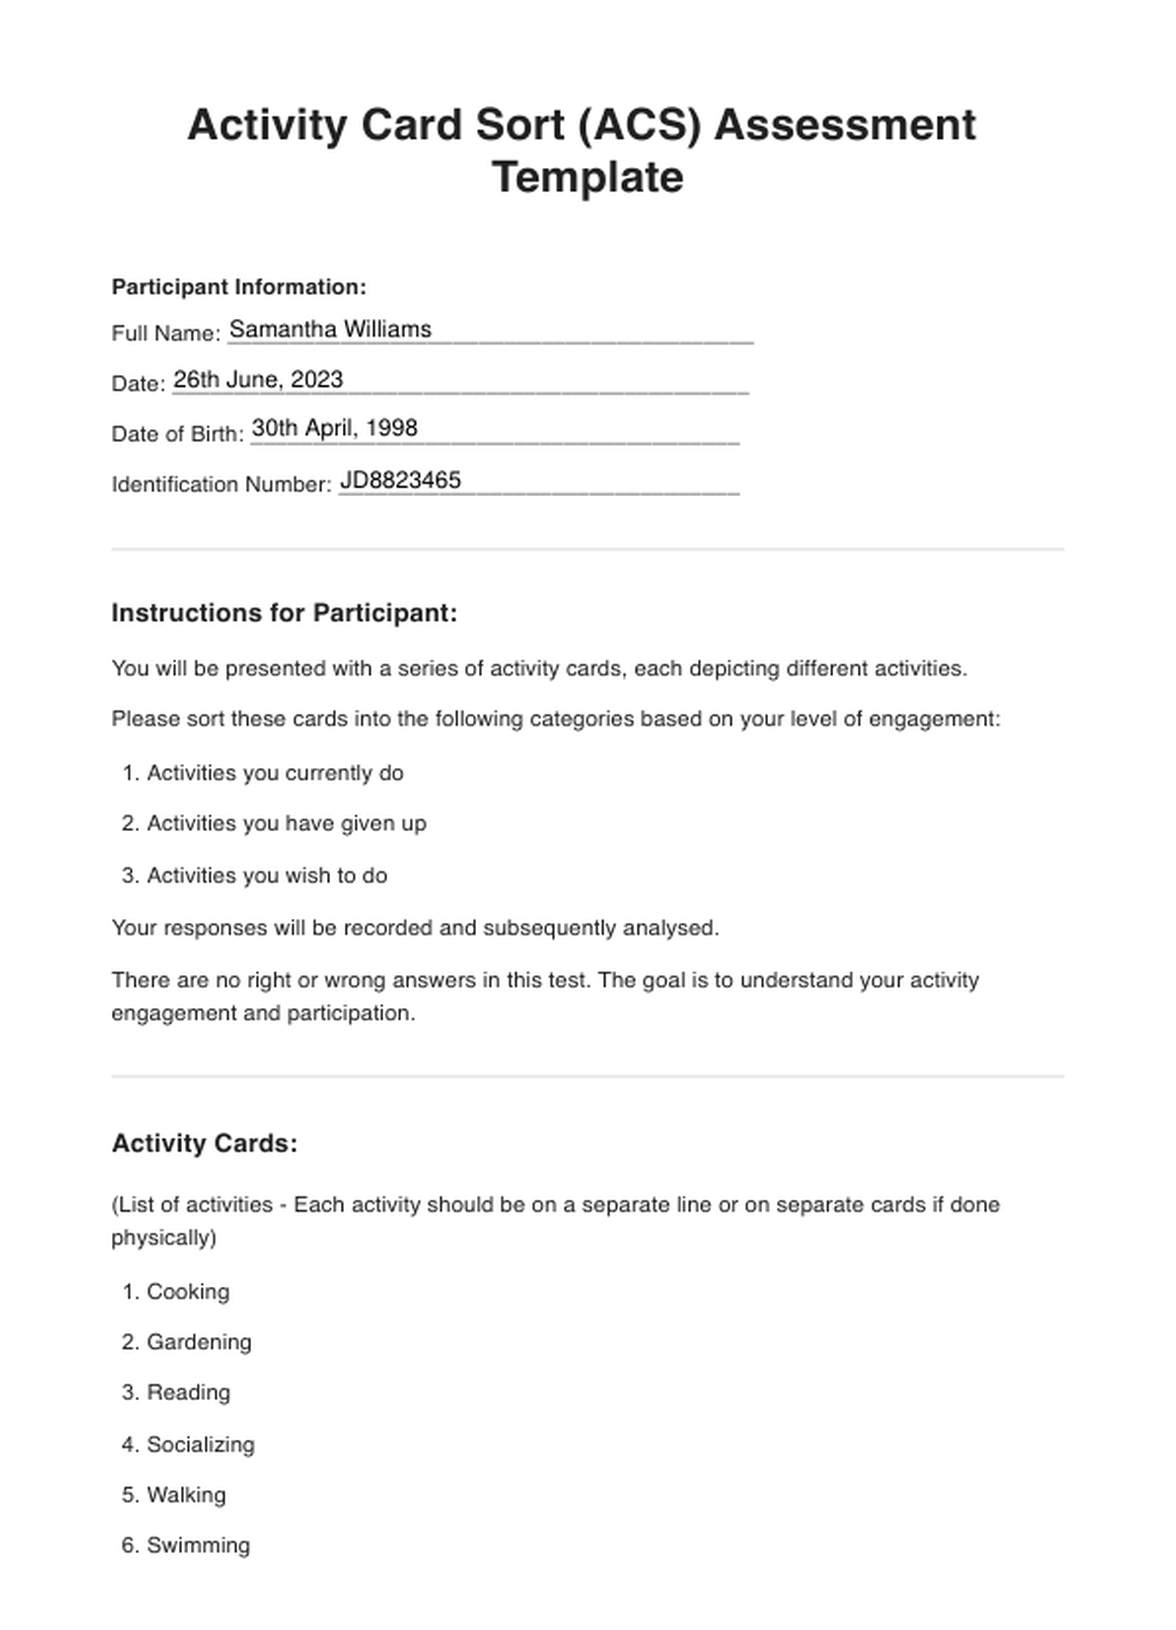 Activity Card Sort PDF Example